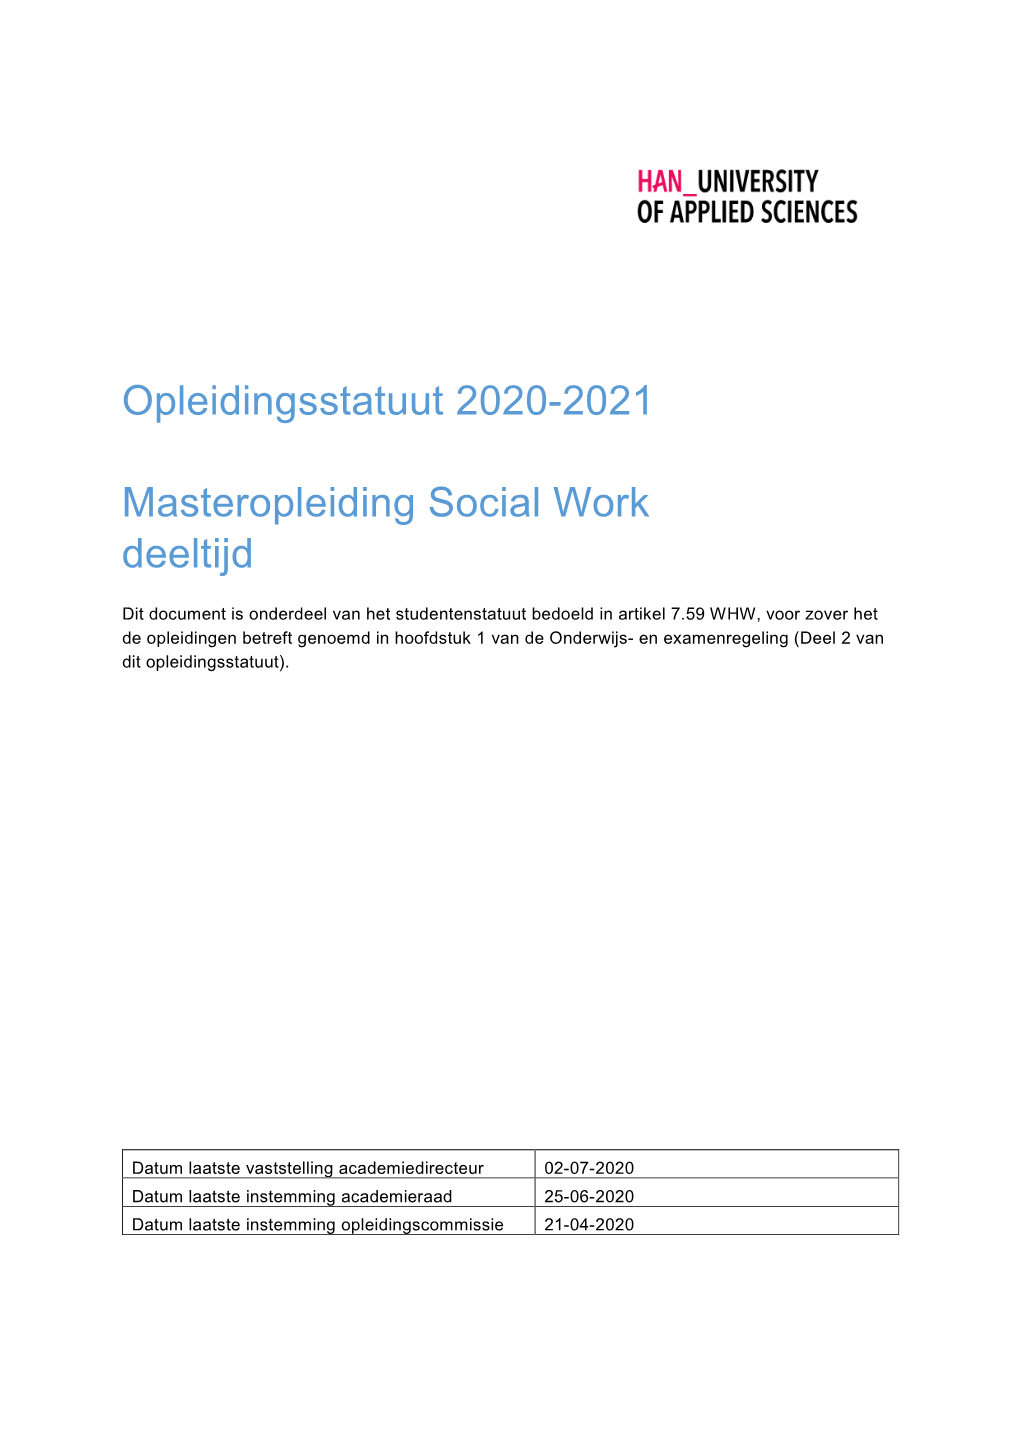 Opleidingsstatuut 2020-2021 Masteropleiding Social Work Deeltijd